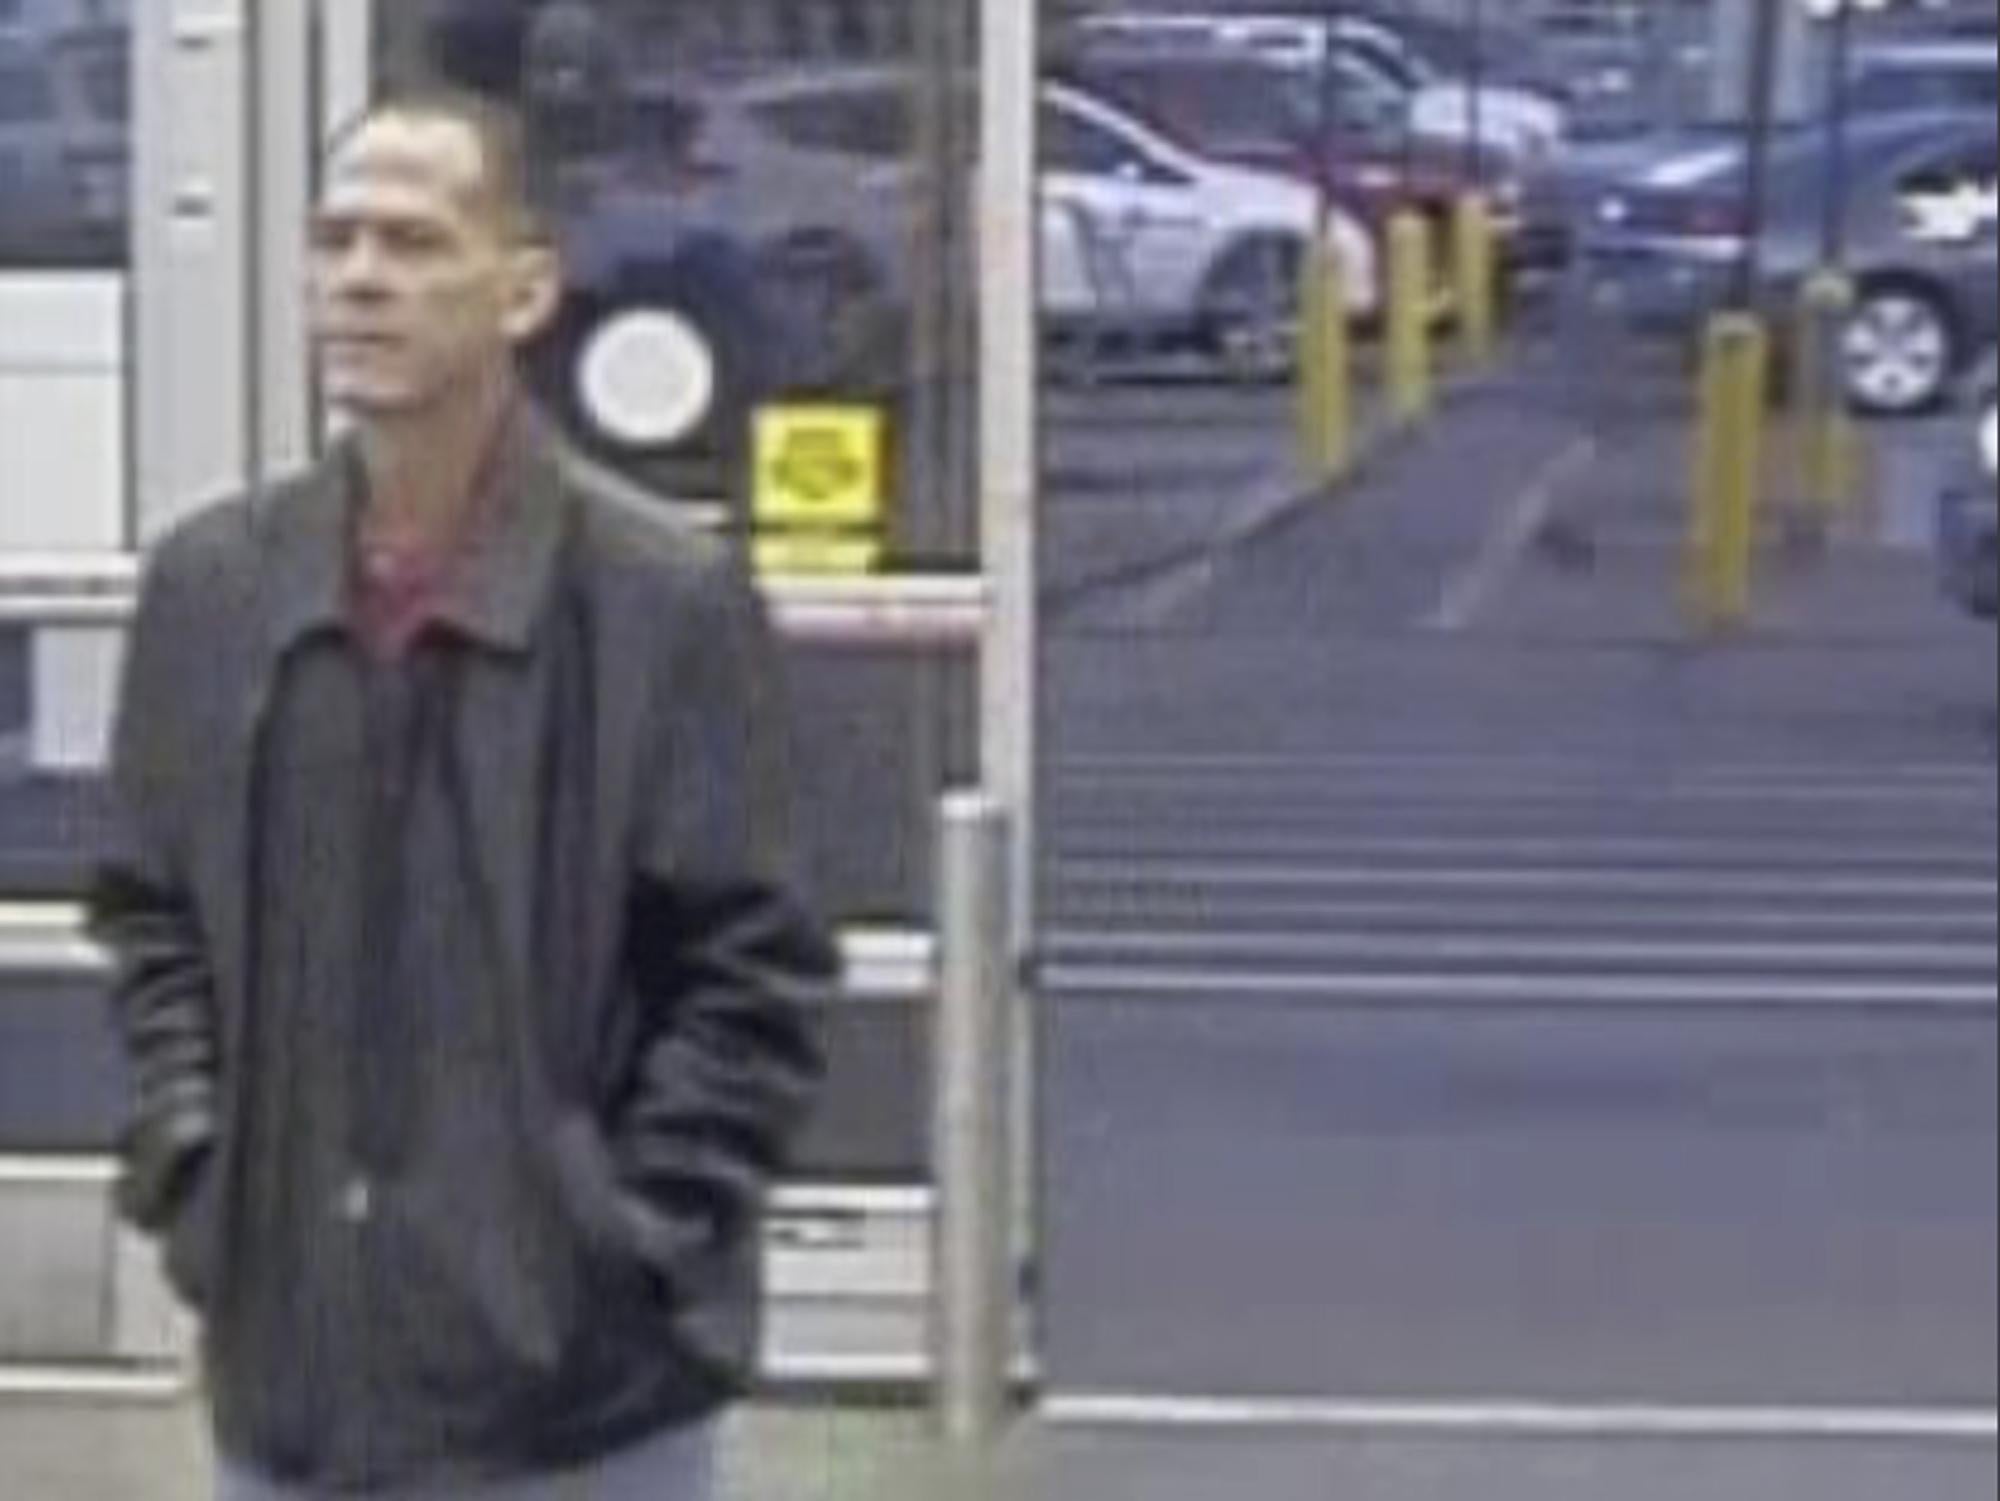 Scott Ostrem ‘nonchalantly’ entered the Walmart before killing three people